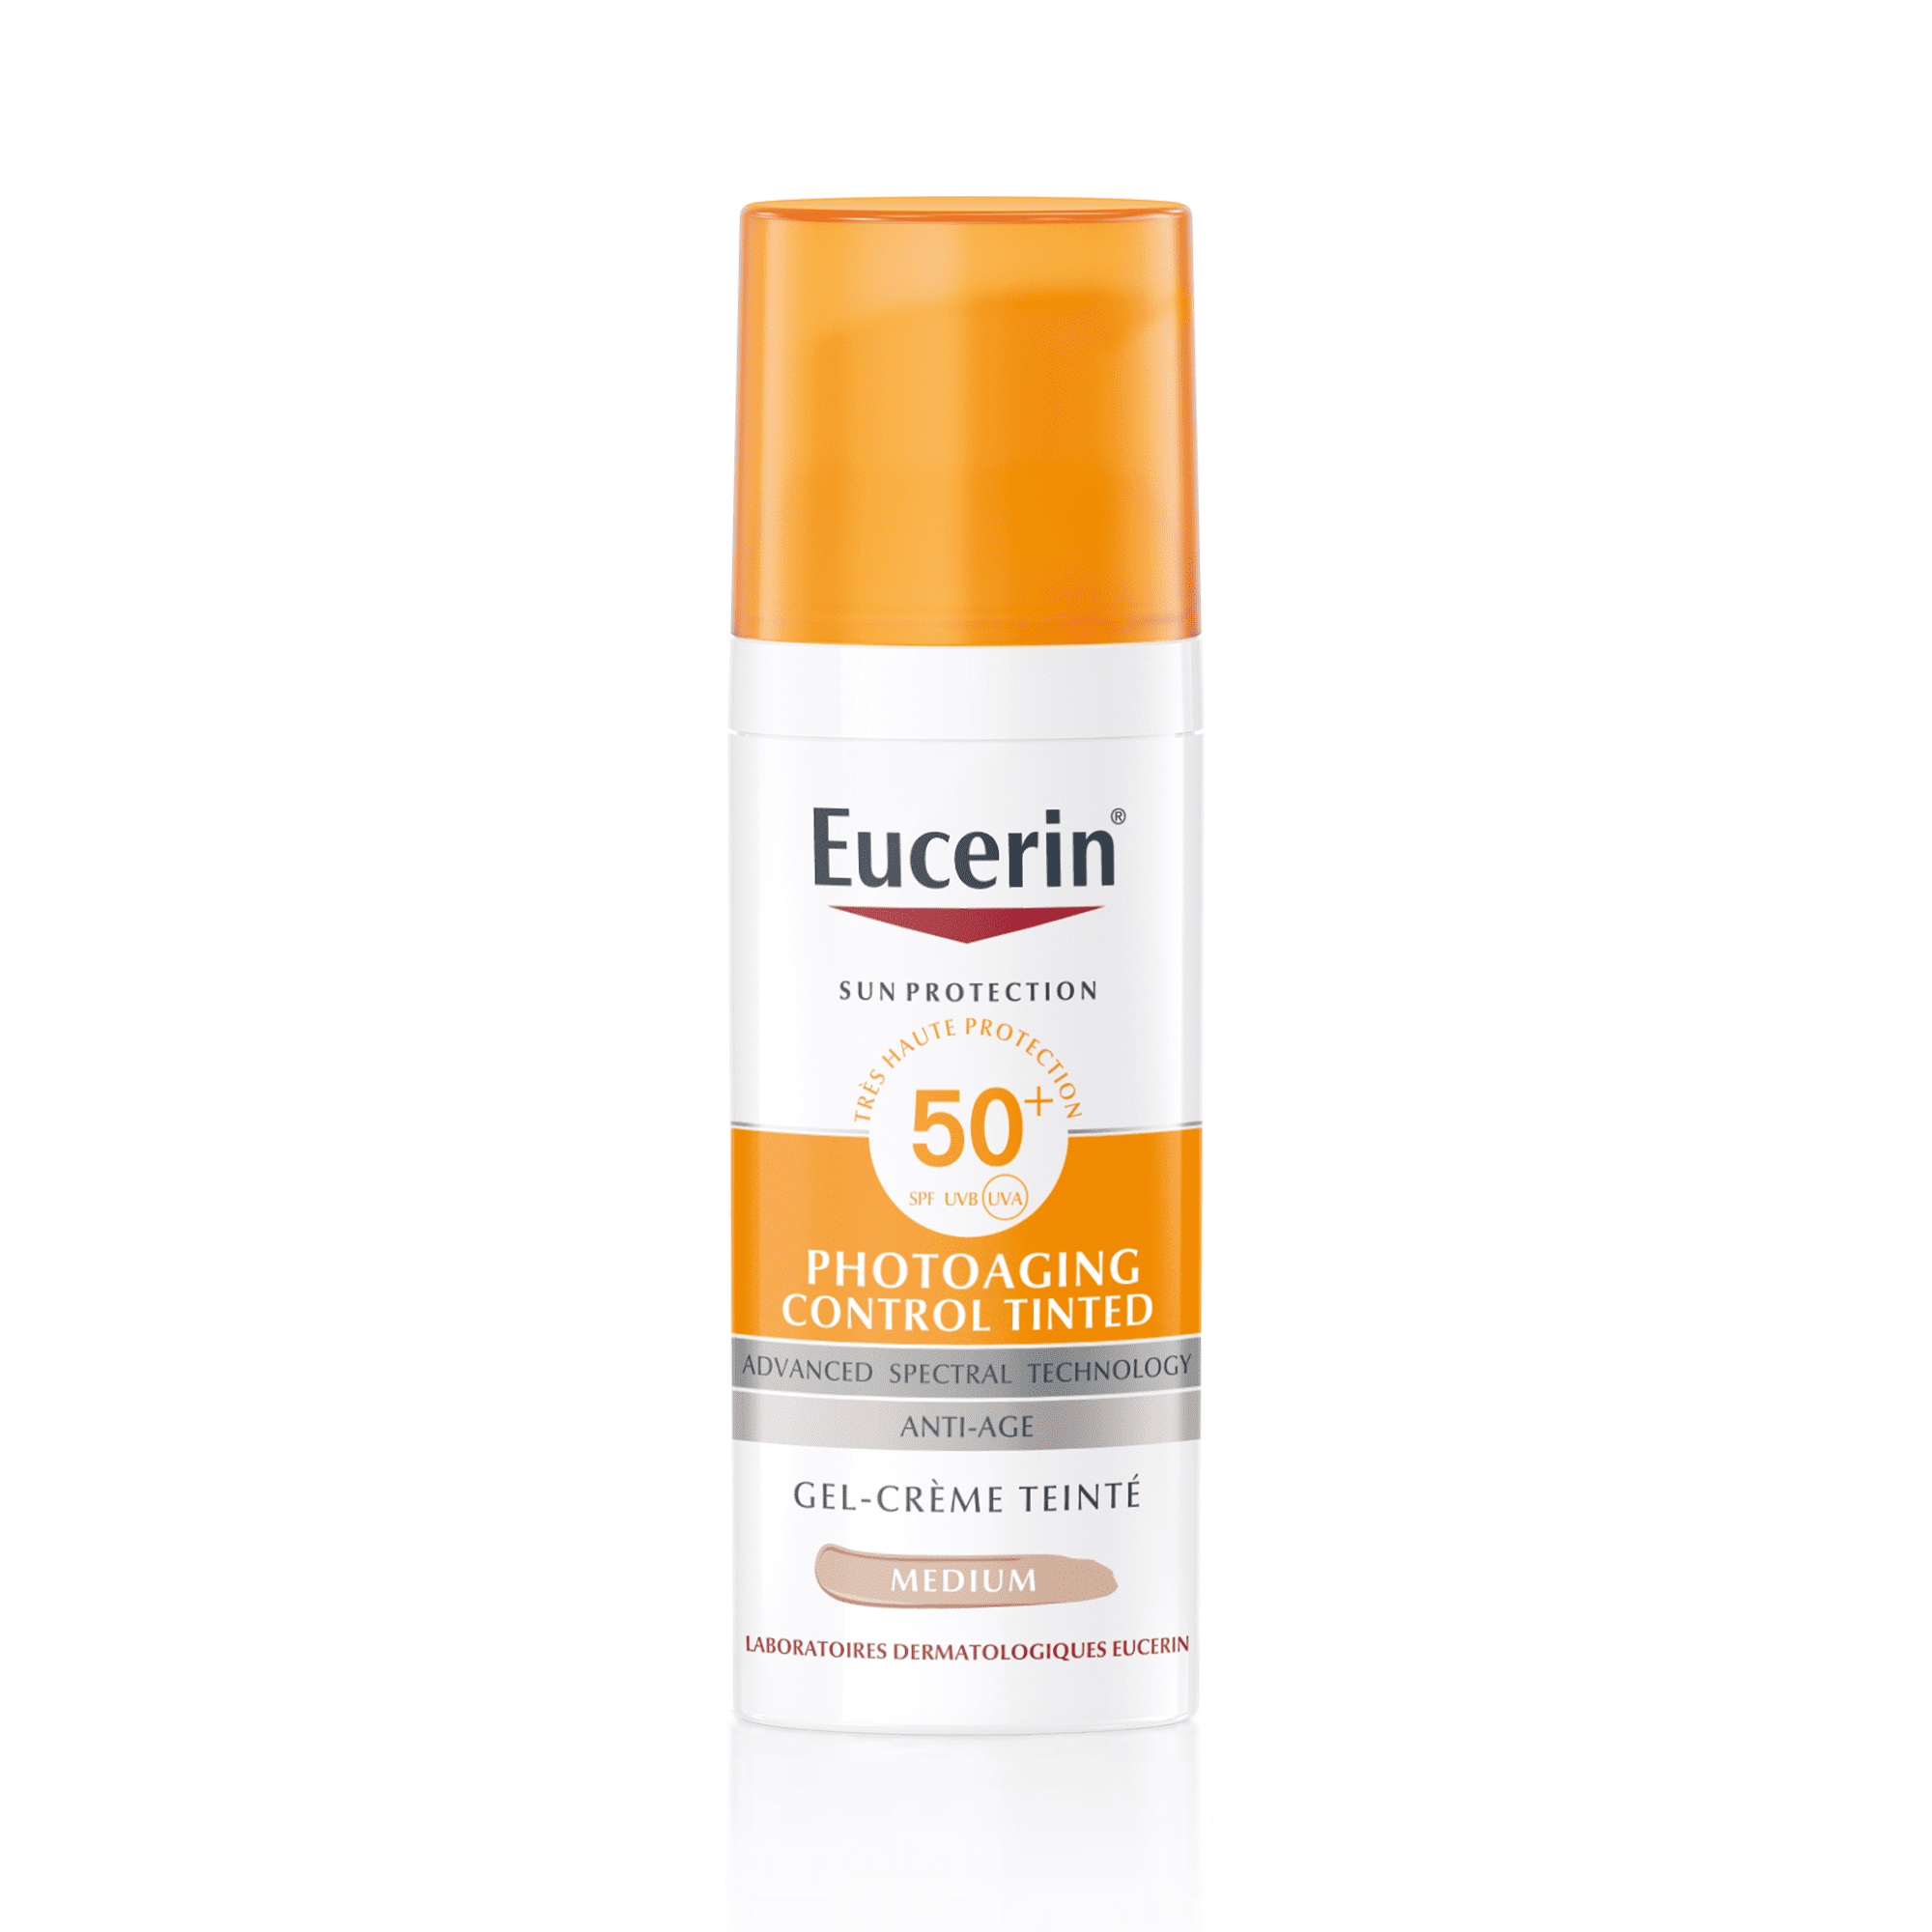 Eucerin Sun Creme Teintée Photoaging Control SPF 50+ Medium